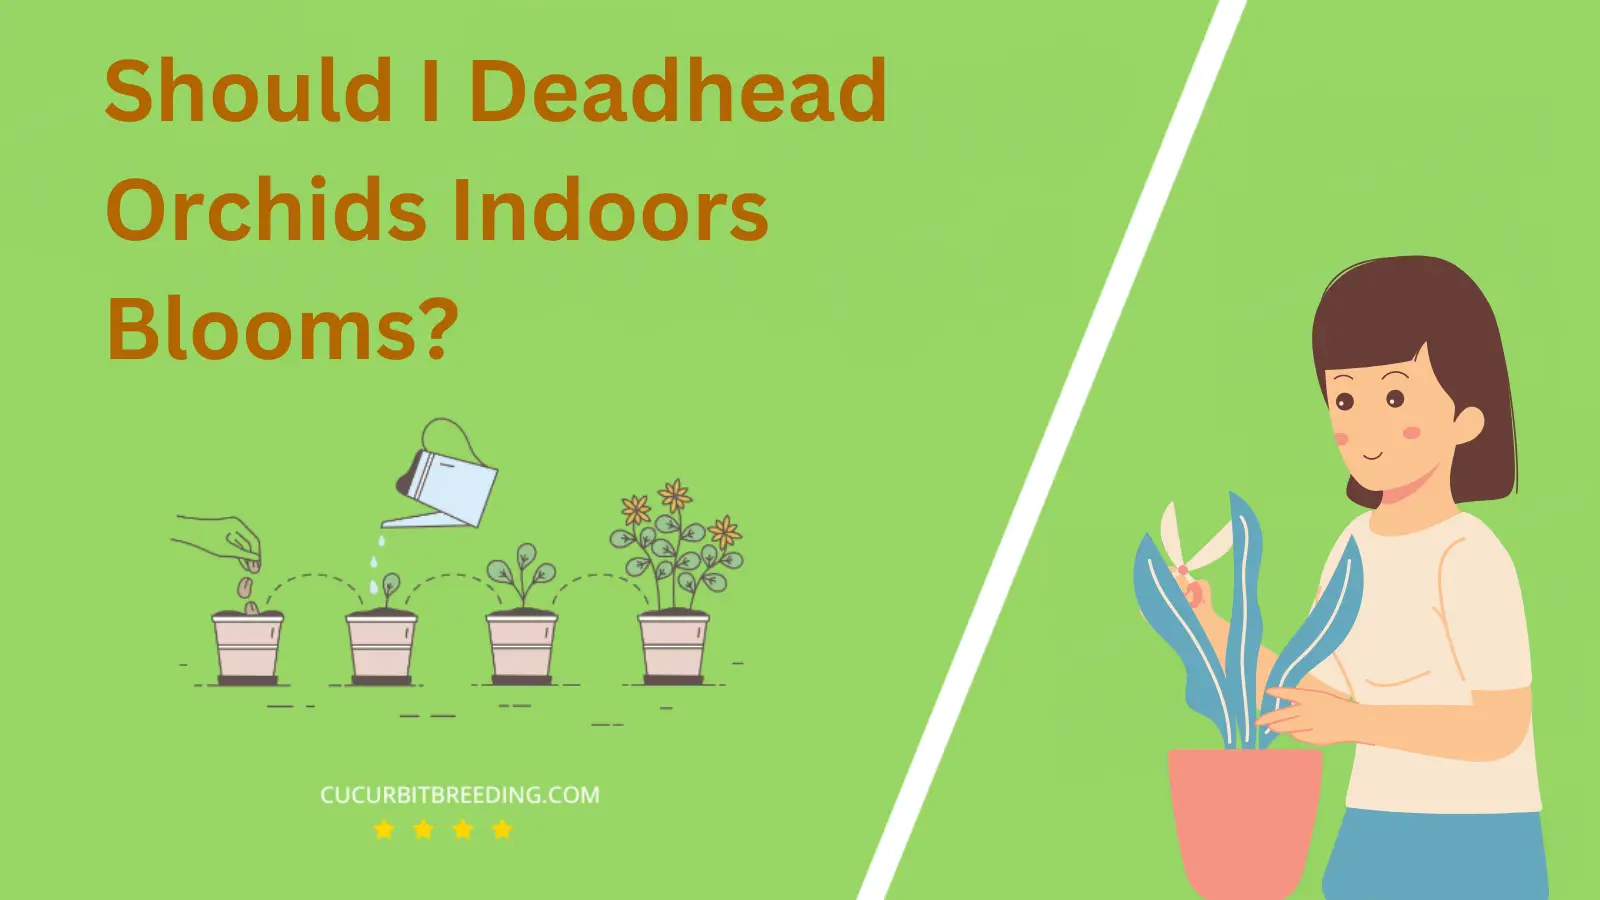 Should I Deadhead Orchids Indoors Blooms?